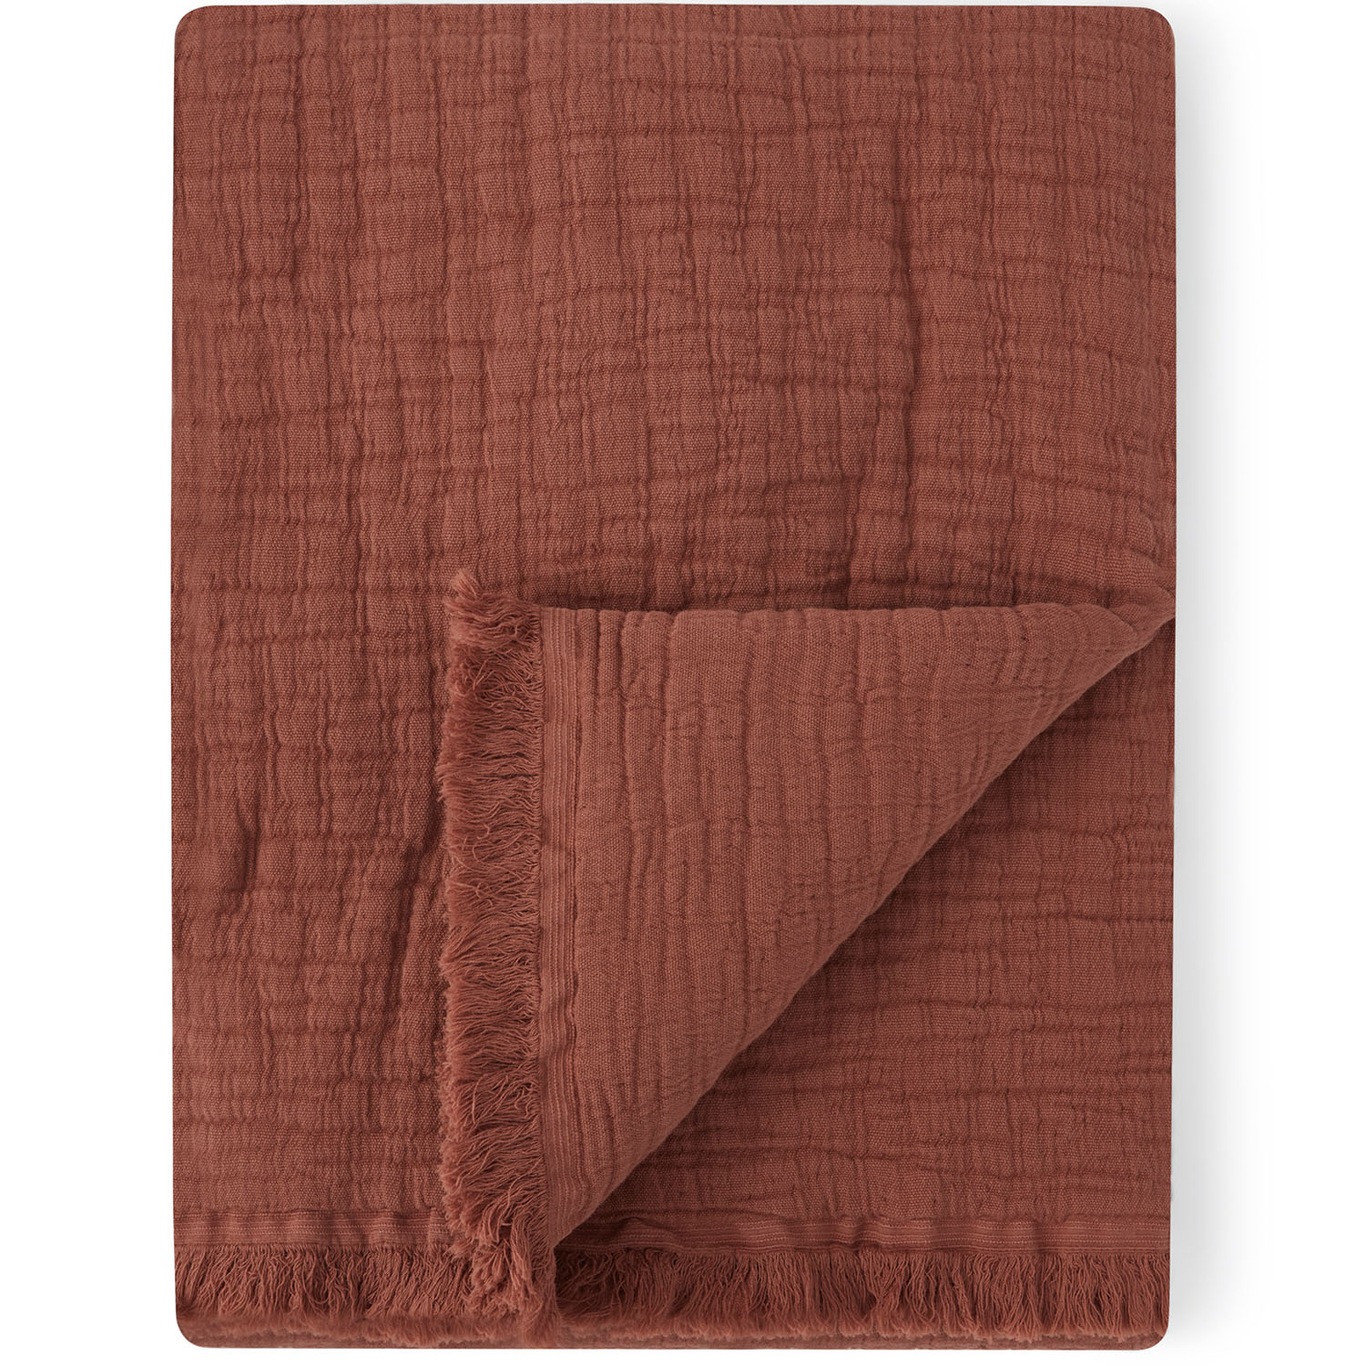 Blanket Rust, 110x110 cm